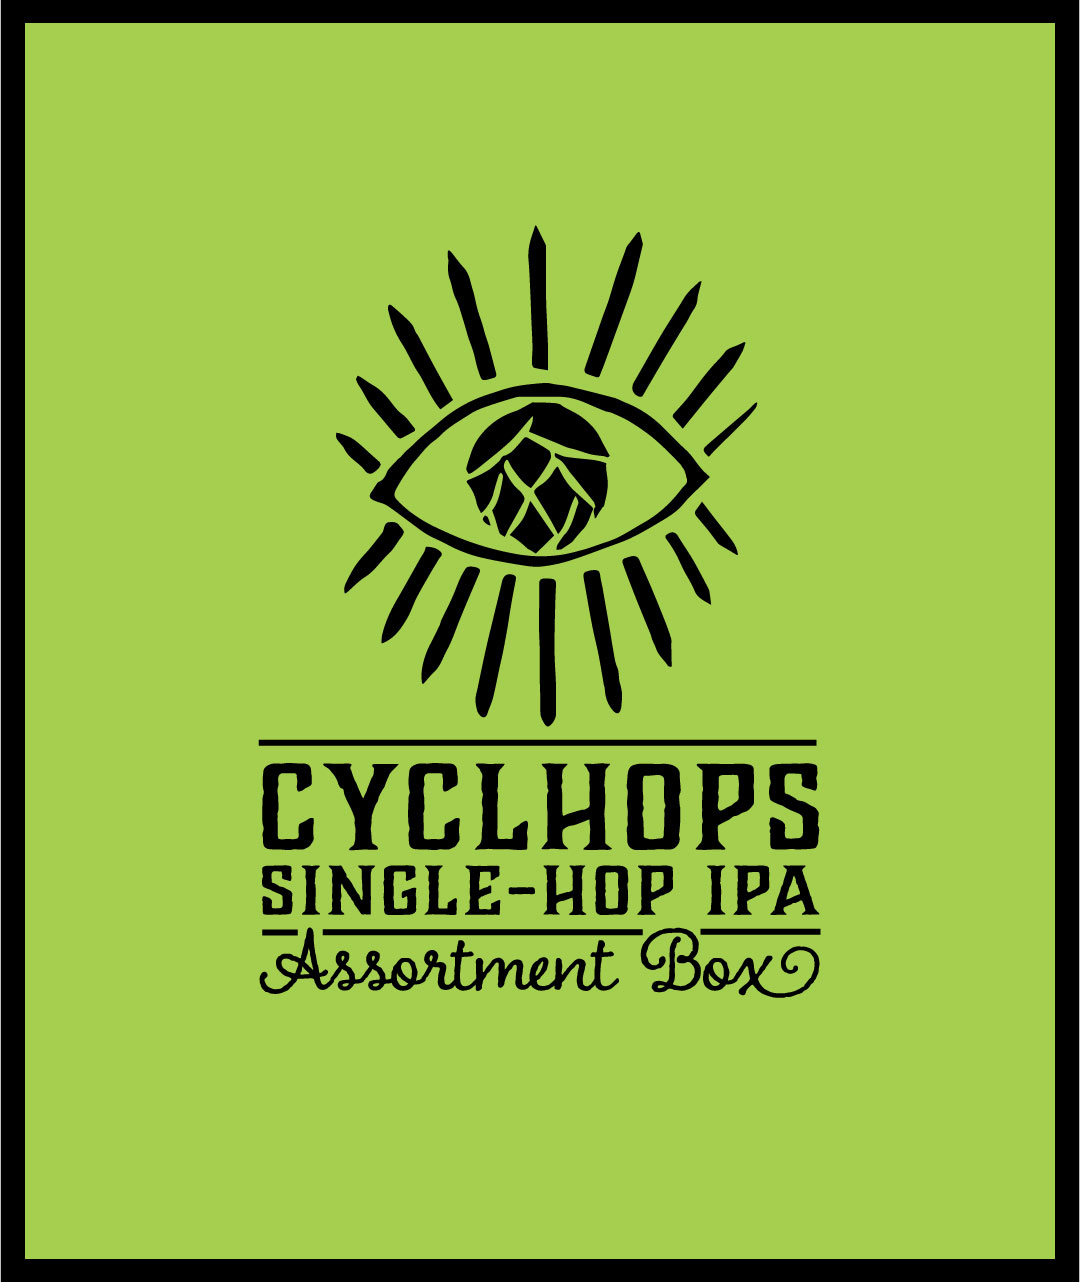 CYCLHOPS SINGLE HOP IPA ASSORTMENT BOX